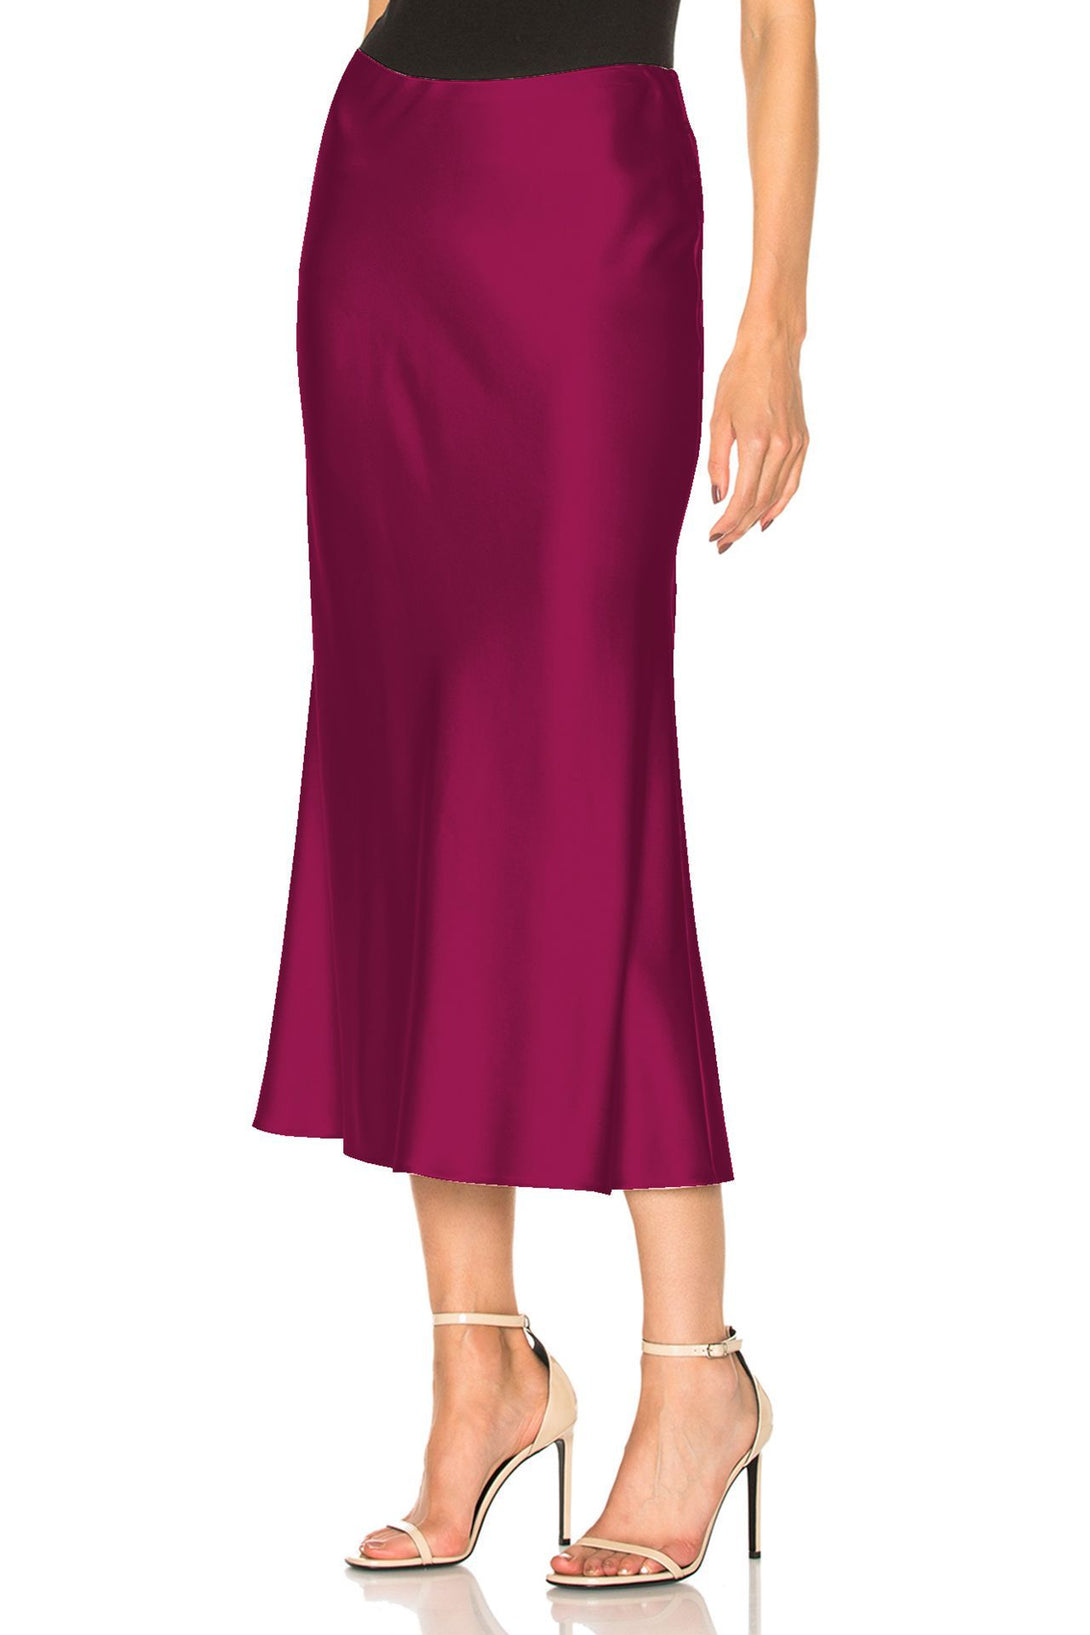 Designer-Silk-Skirt-In-Purple-For-Womens-By-Kyle-Richards